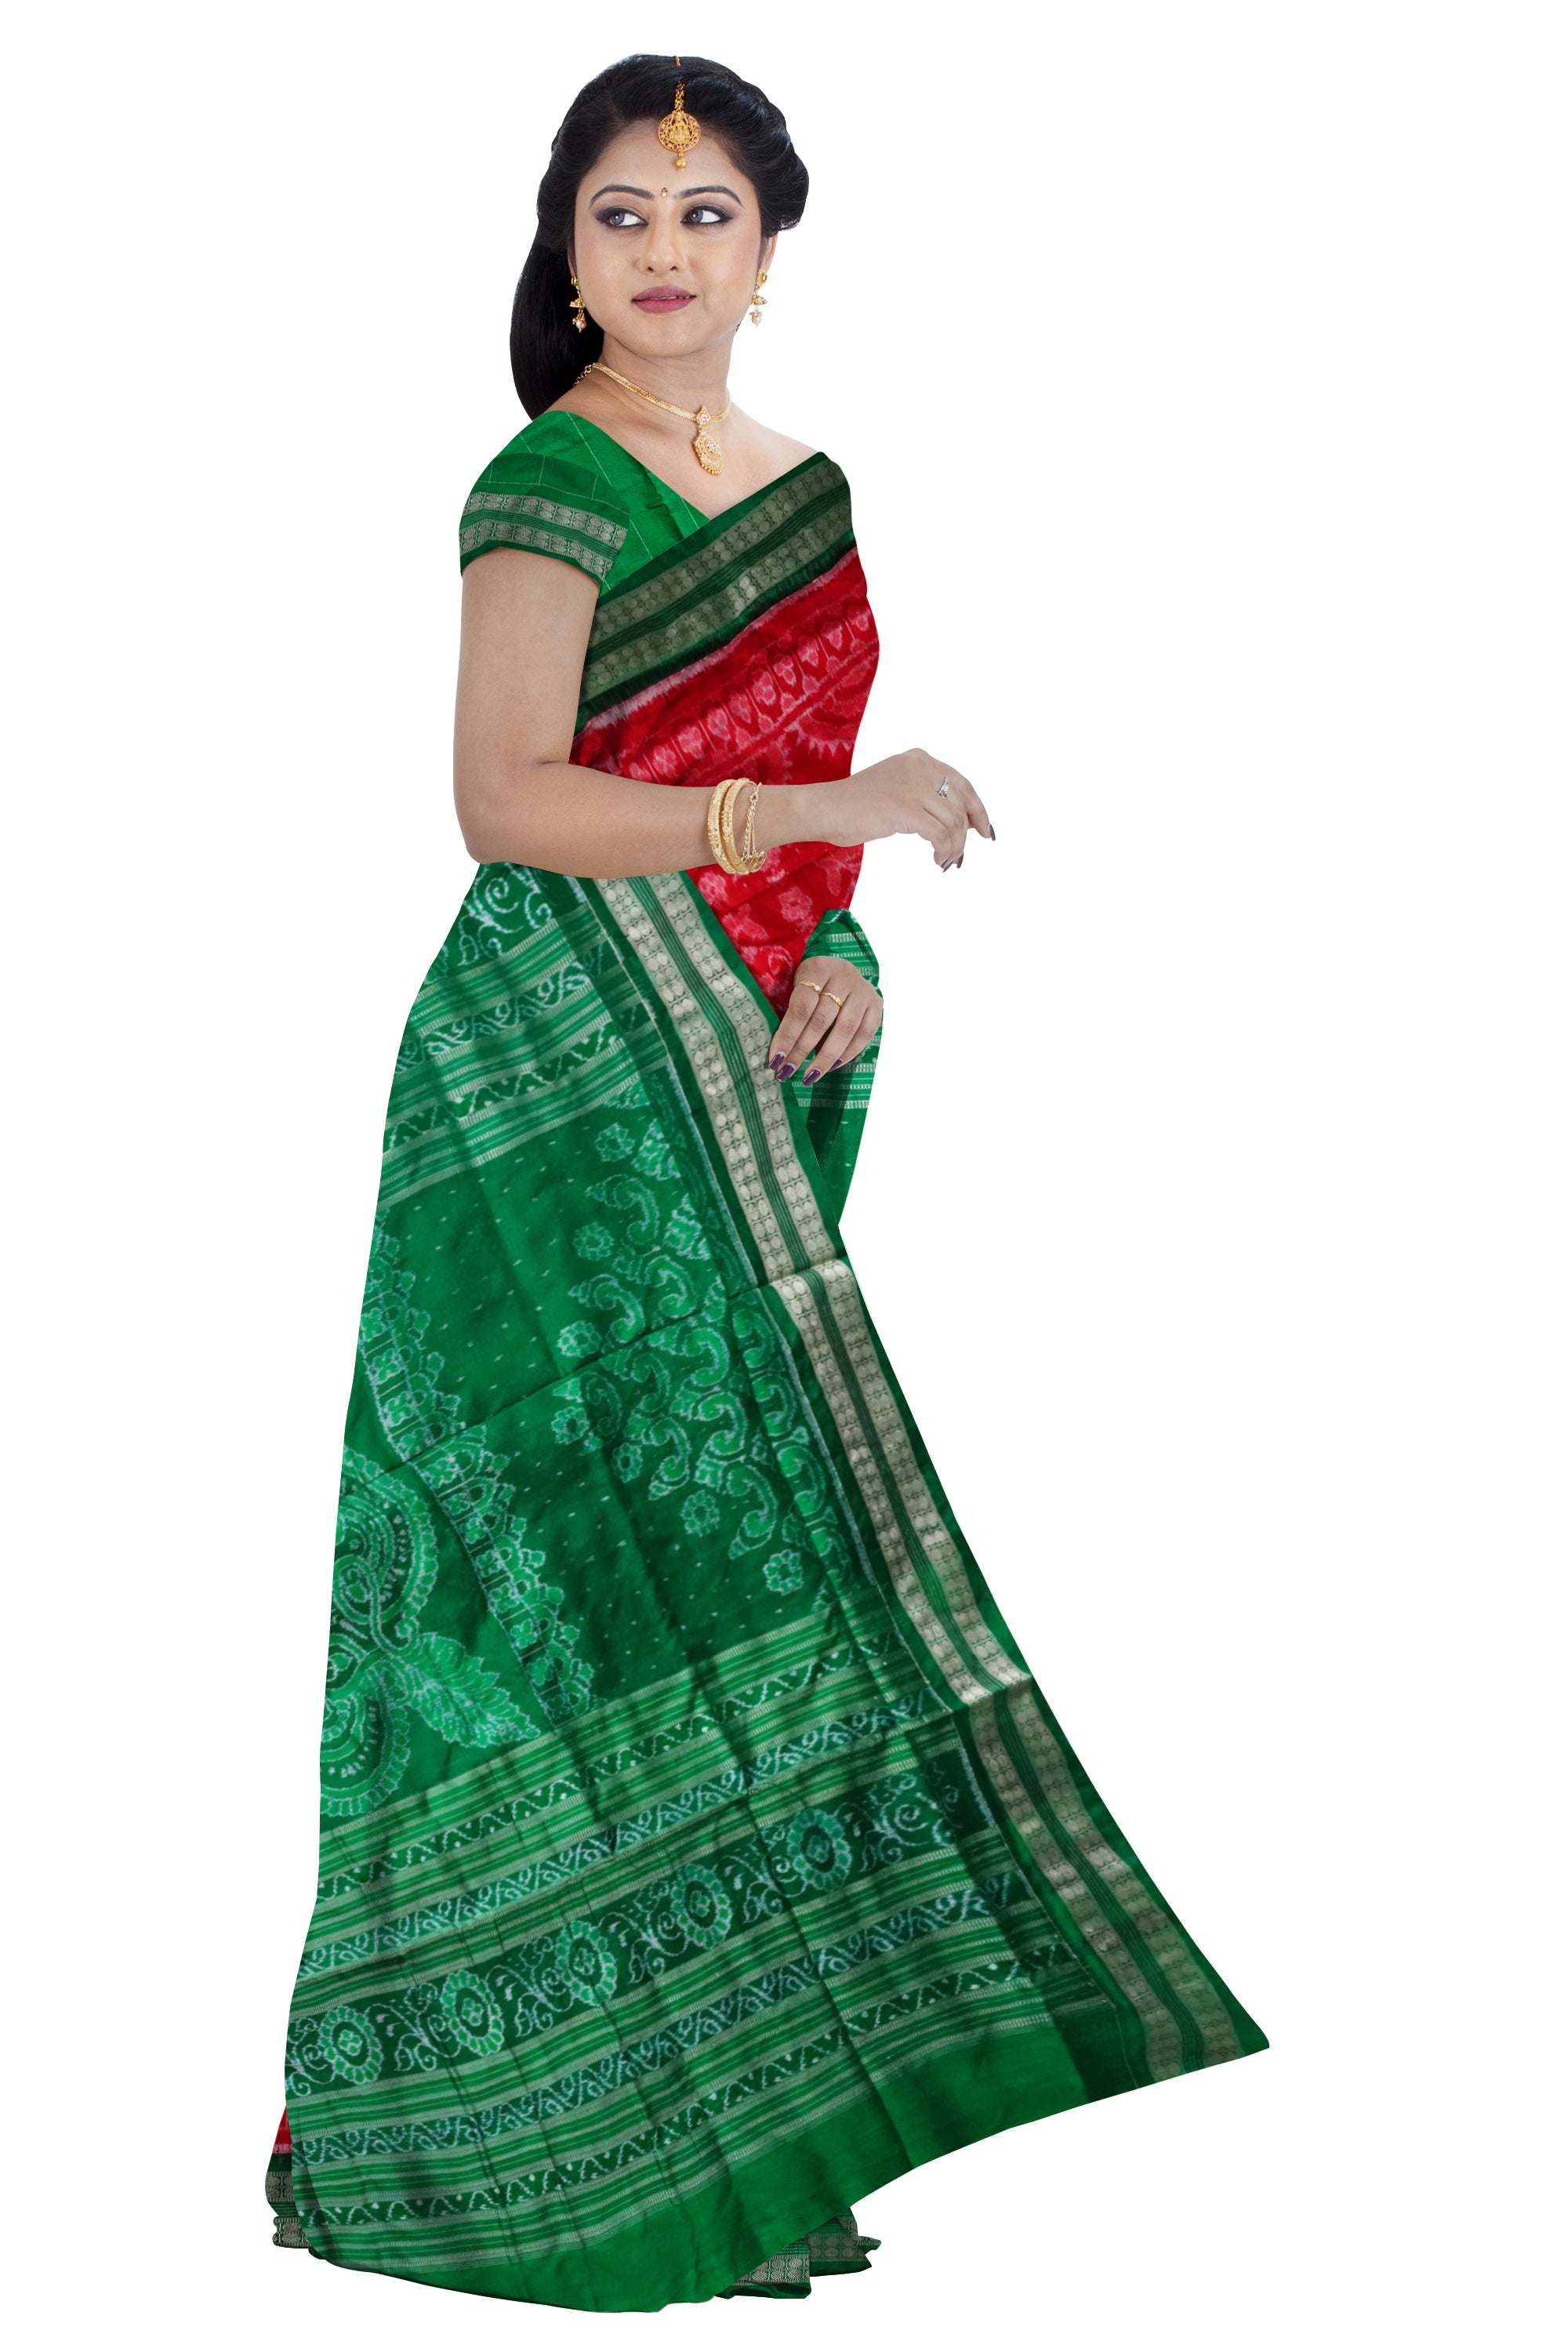 Red and Green color tajmahal pattern sambalpuri pure pata saree. - Koshali Arts & Crafts Enterprise